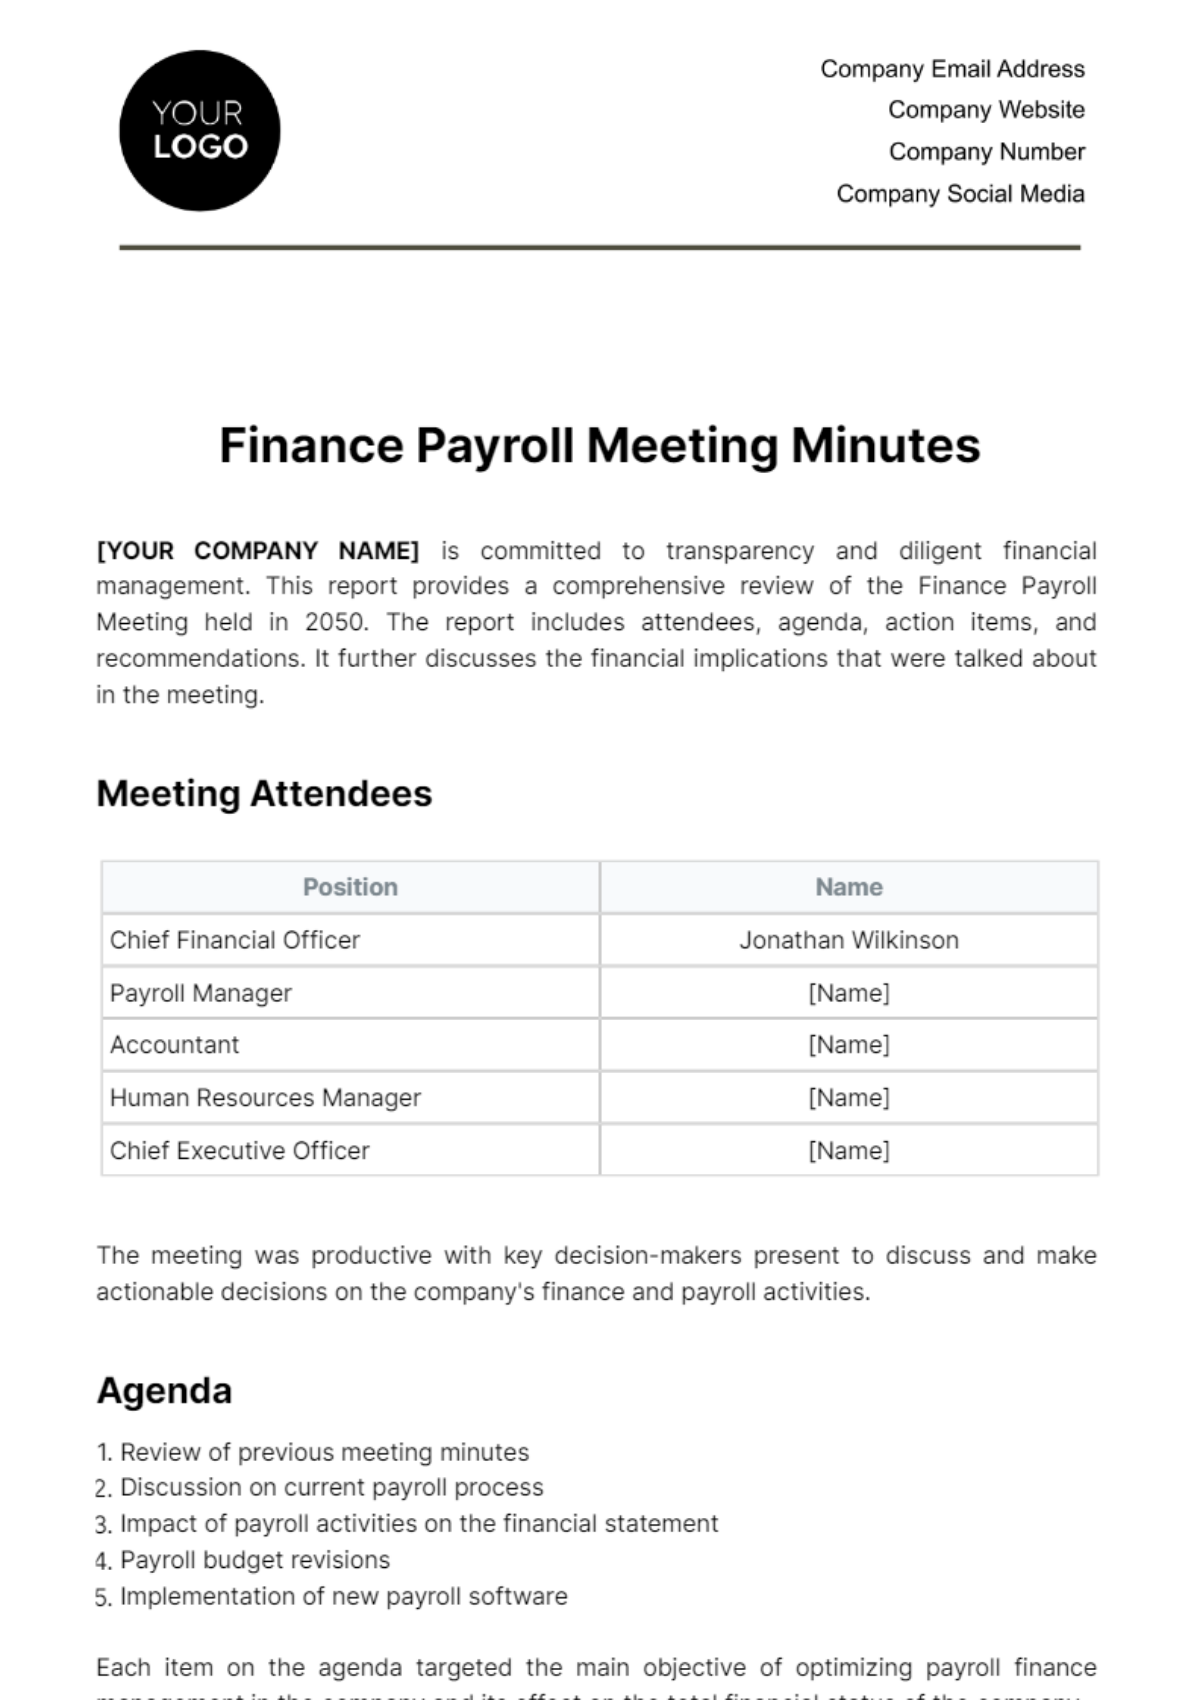 Finance Payroll Meeting Minute Template